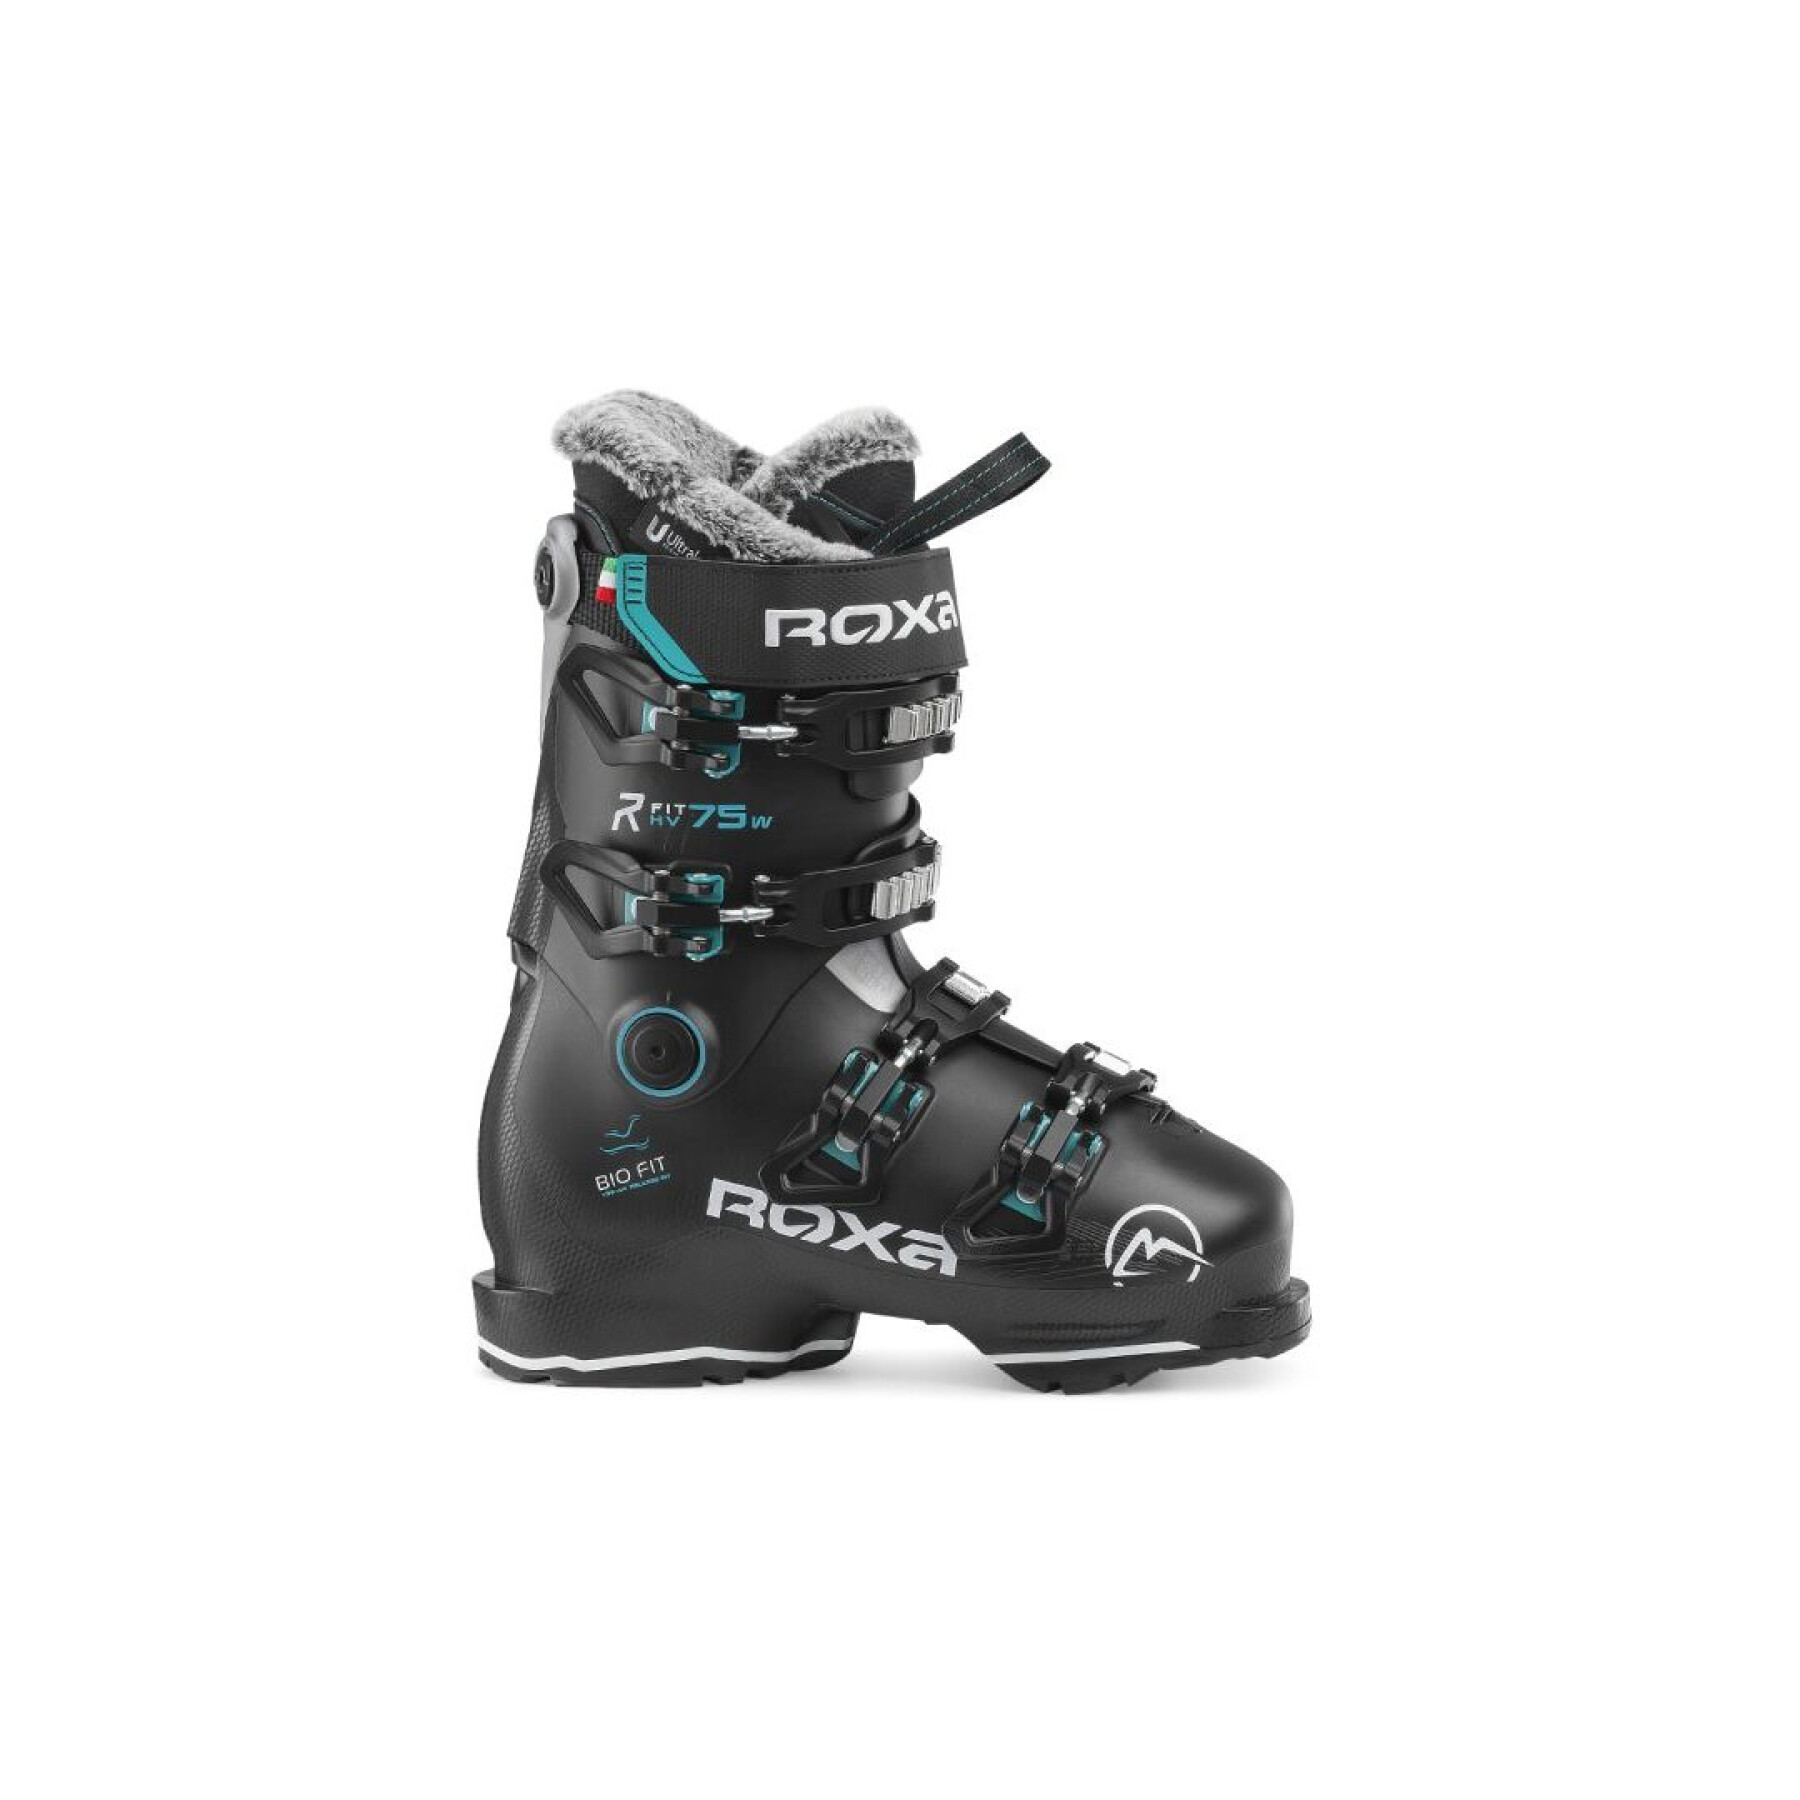 r/fit 75 - gw women's ski boots Roxa